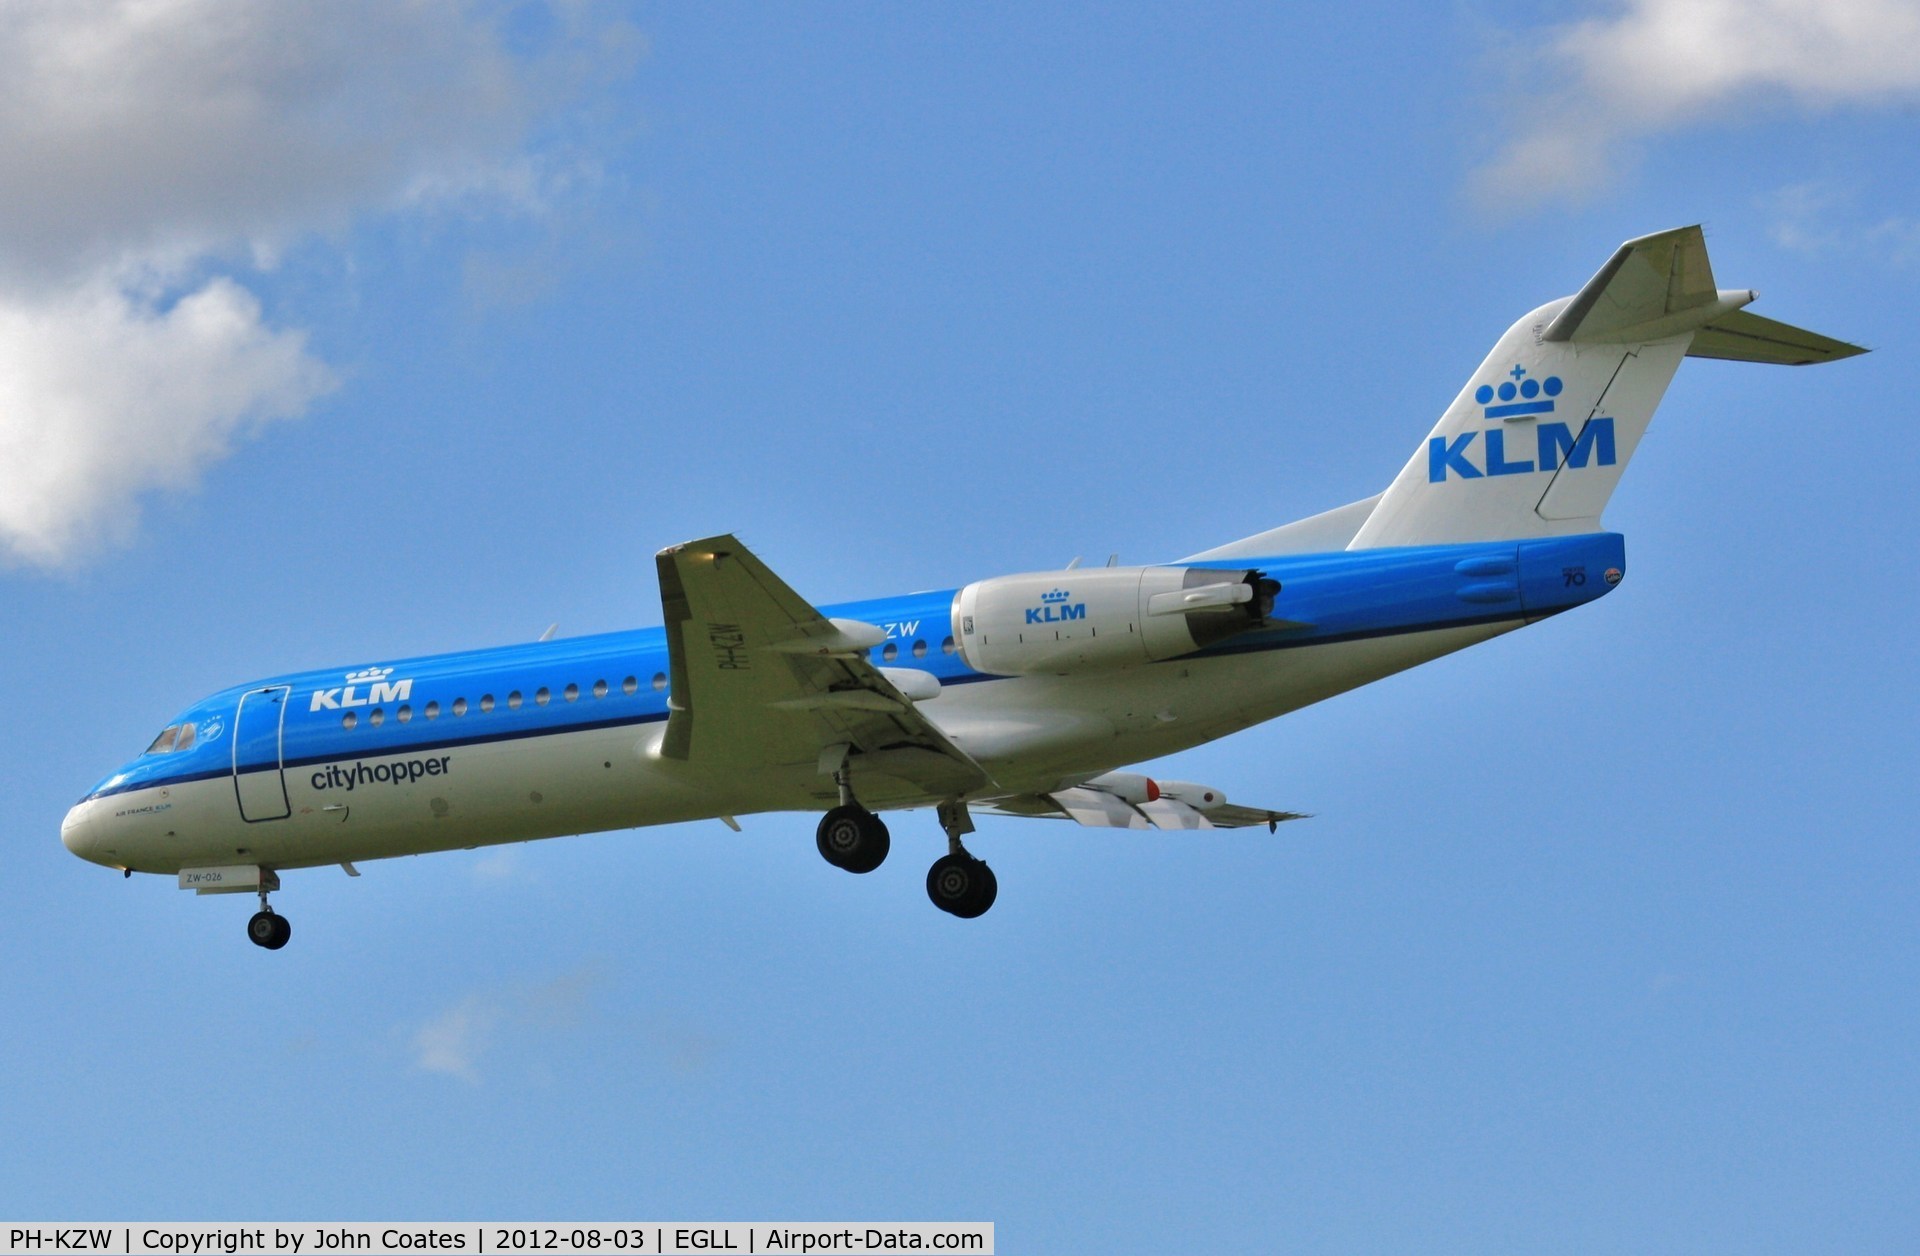 PH-KZW, 1995 Fokker 70 (F-28-0070) C/N 11558, Arrives 27L